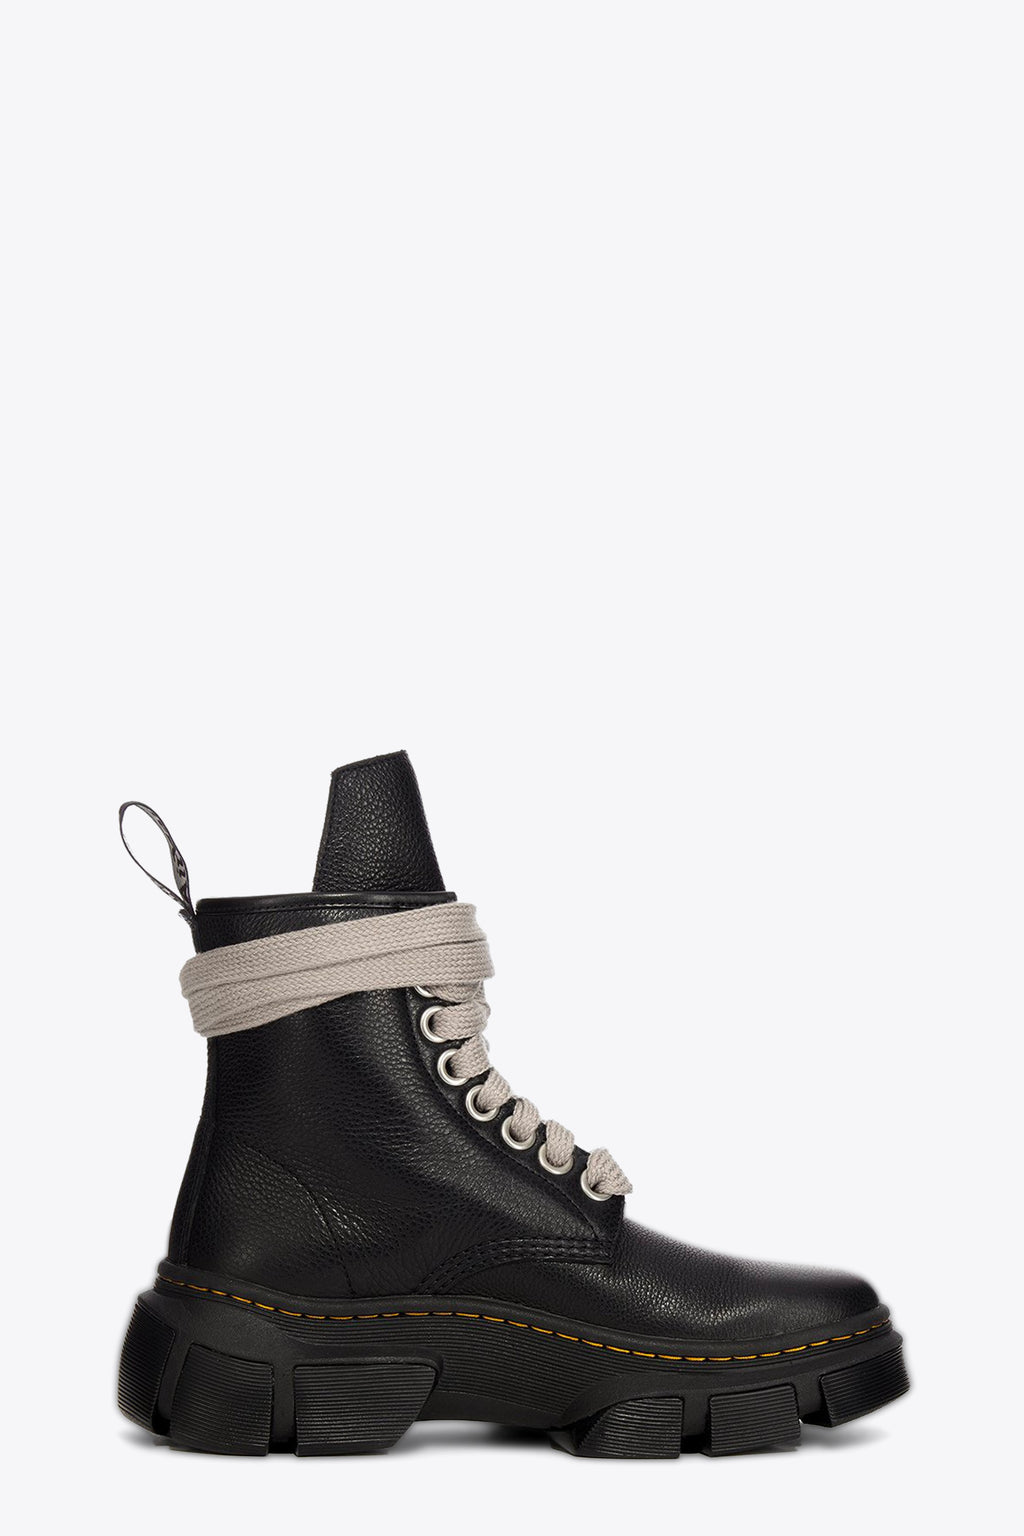 alt-image__Black-pebble-leather-boot-Dr.-Martens---1460-Dmxl-Jumbo-Lace-Boot